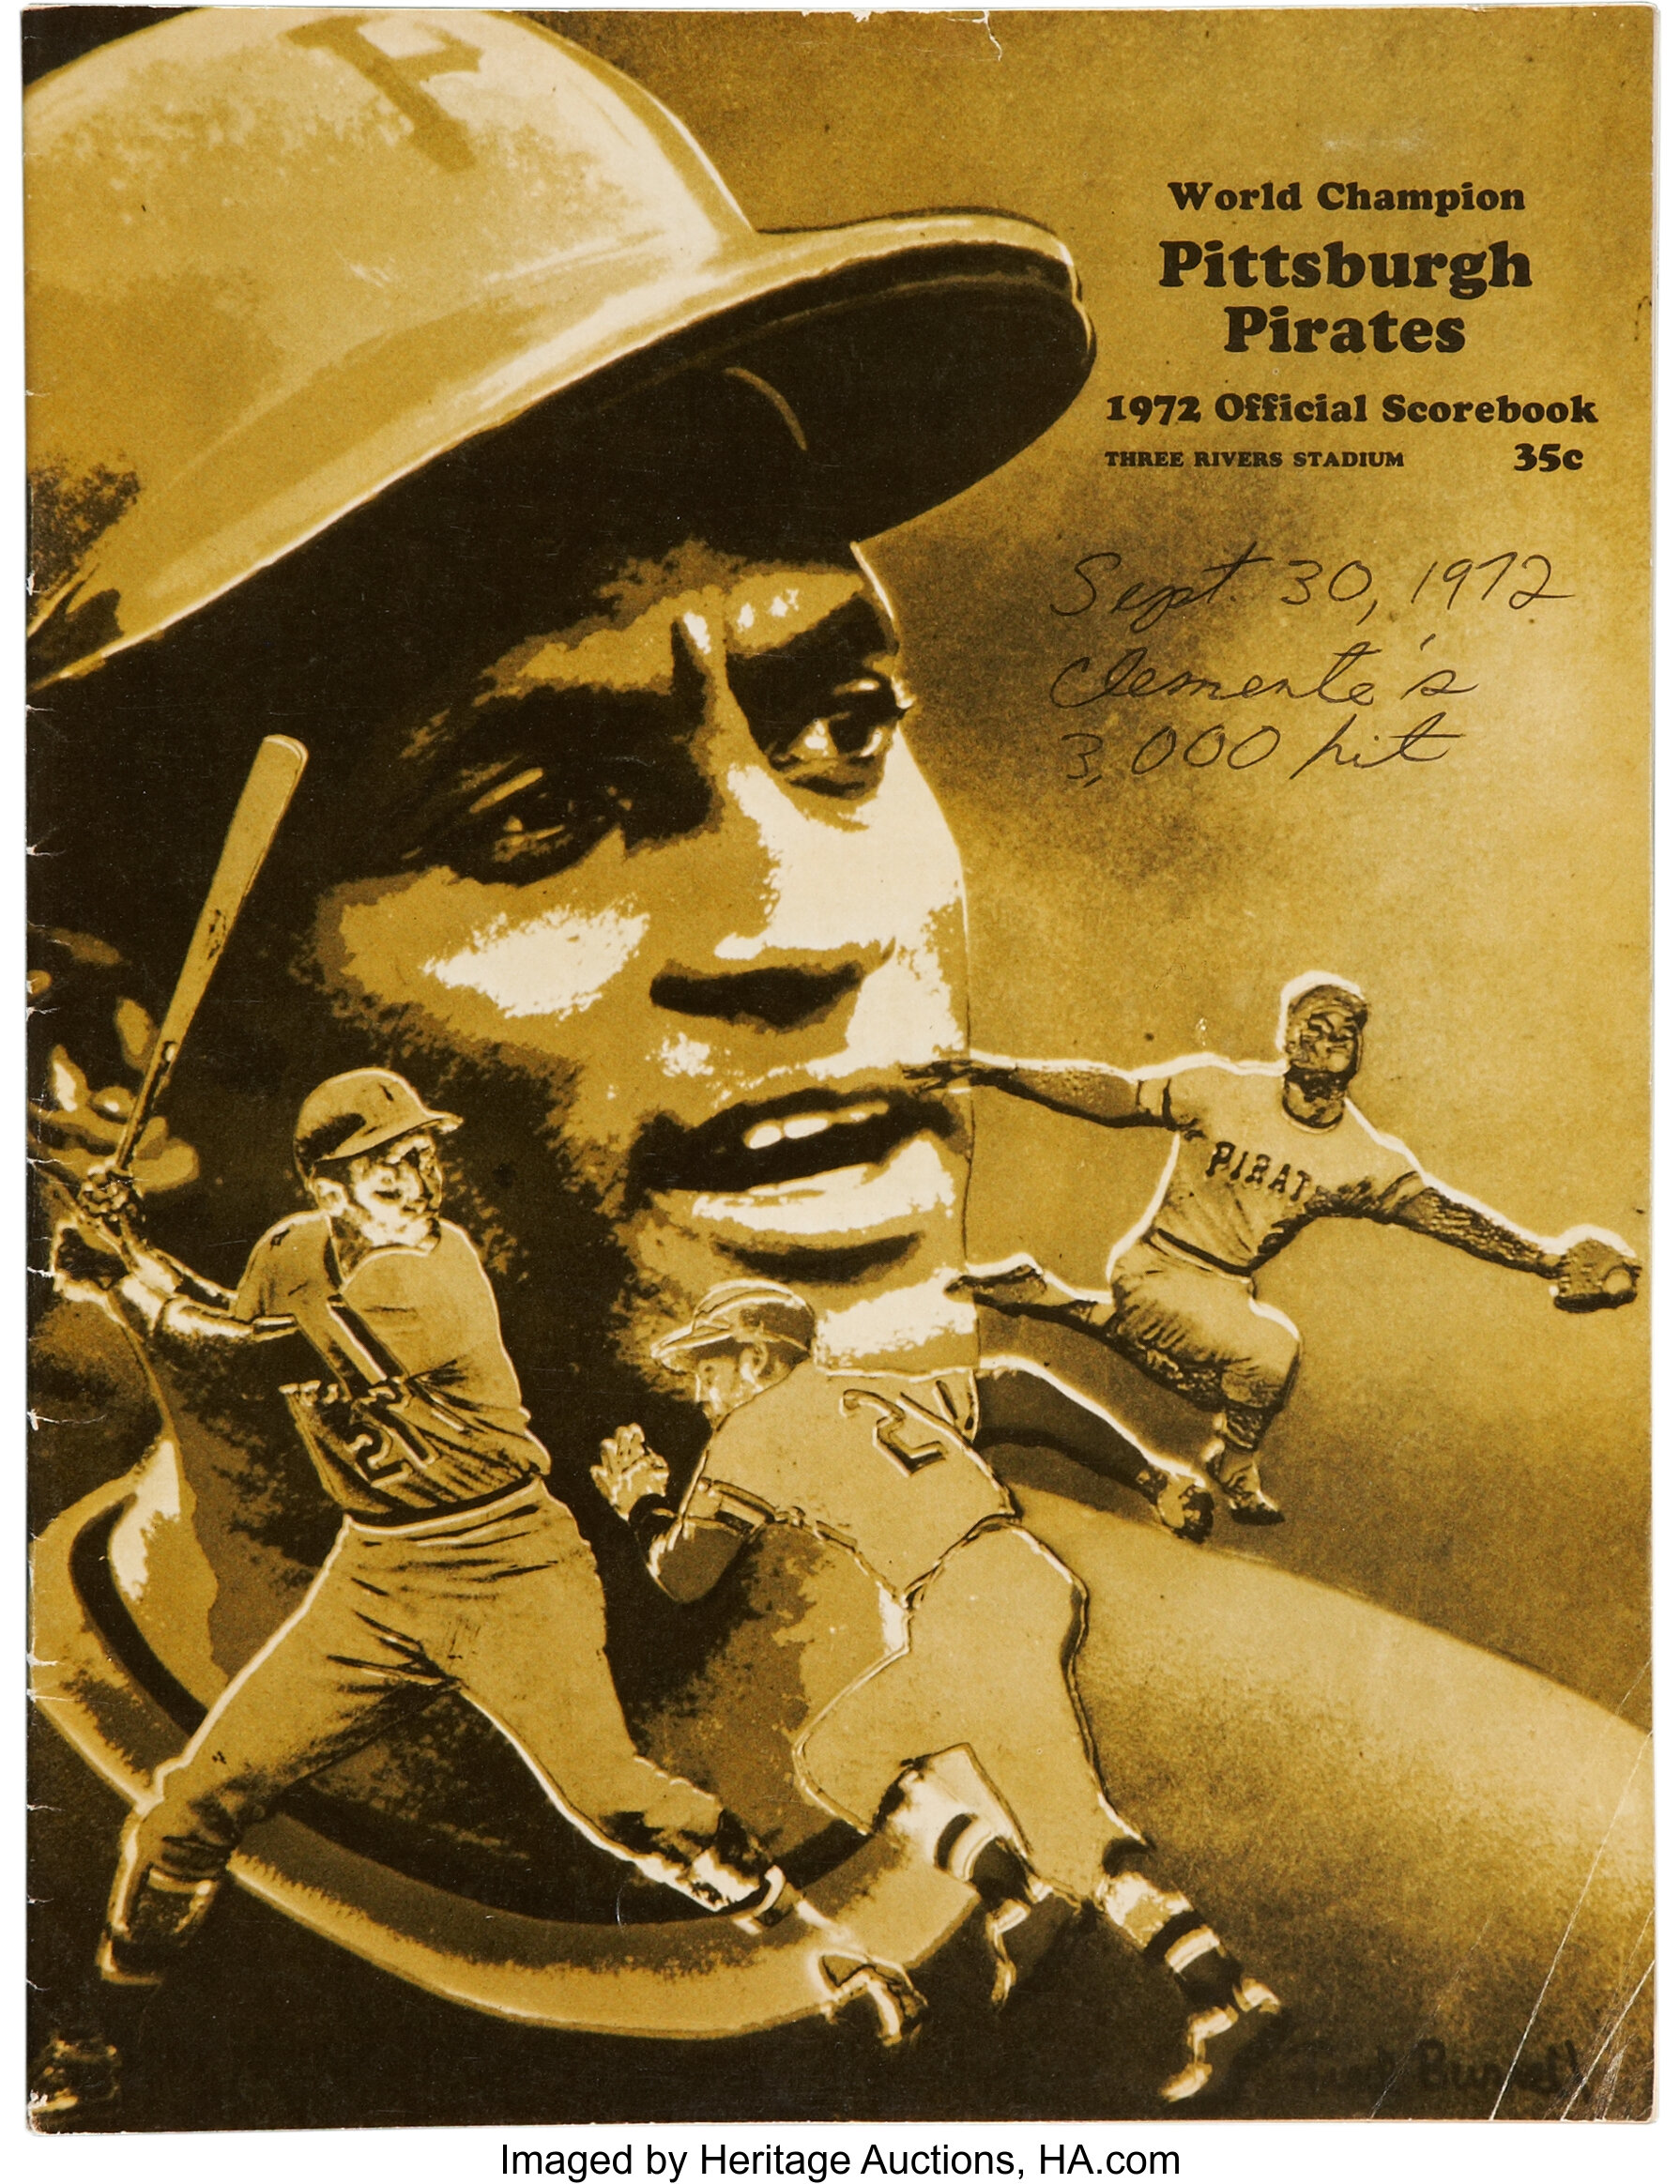 Roberto Clemente Pittsburgh Pirates 3000th Hit September 30, 1972